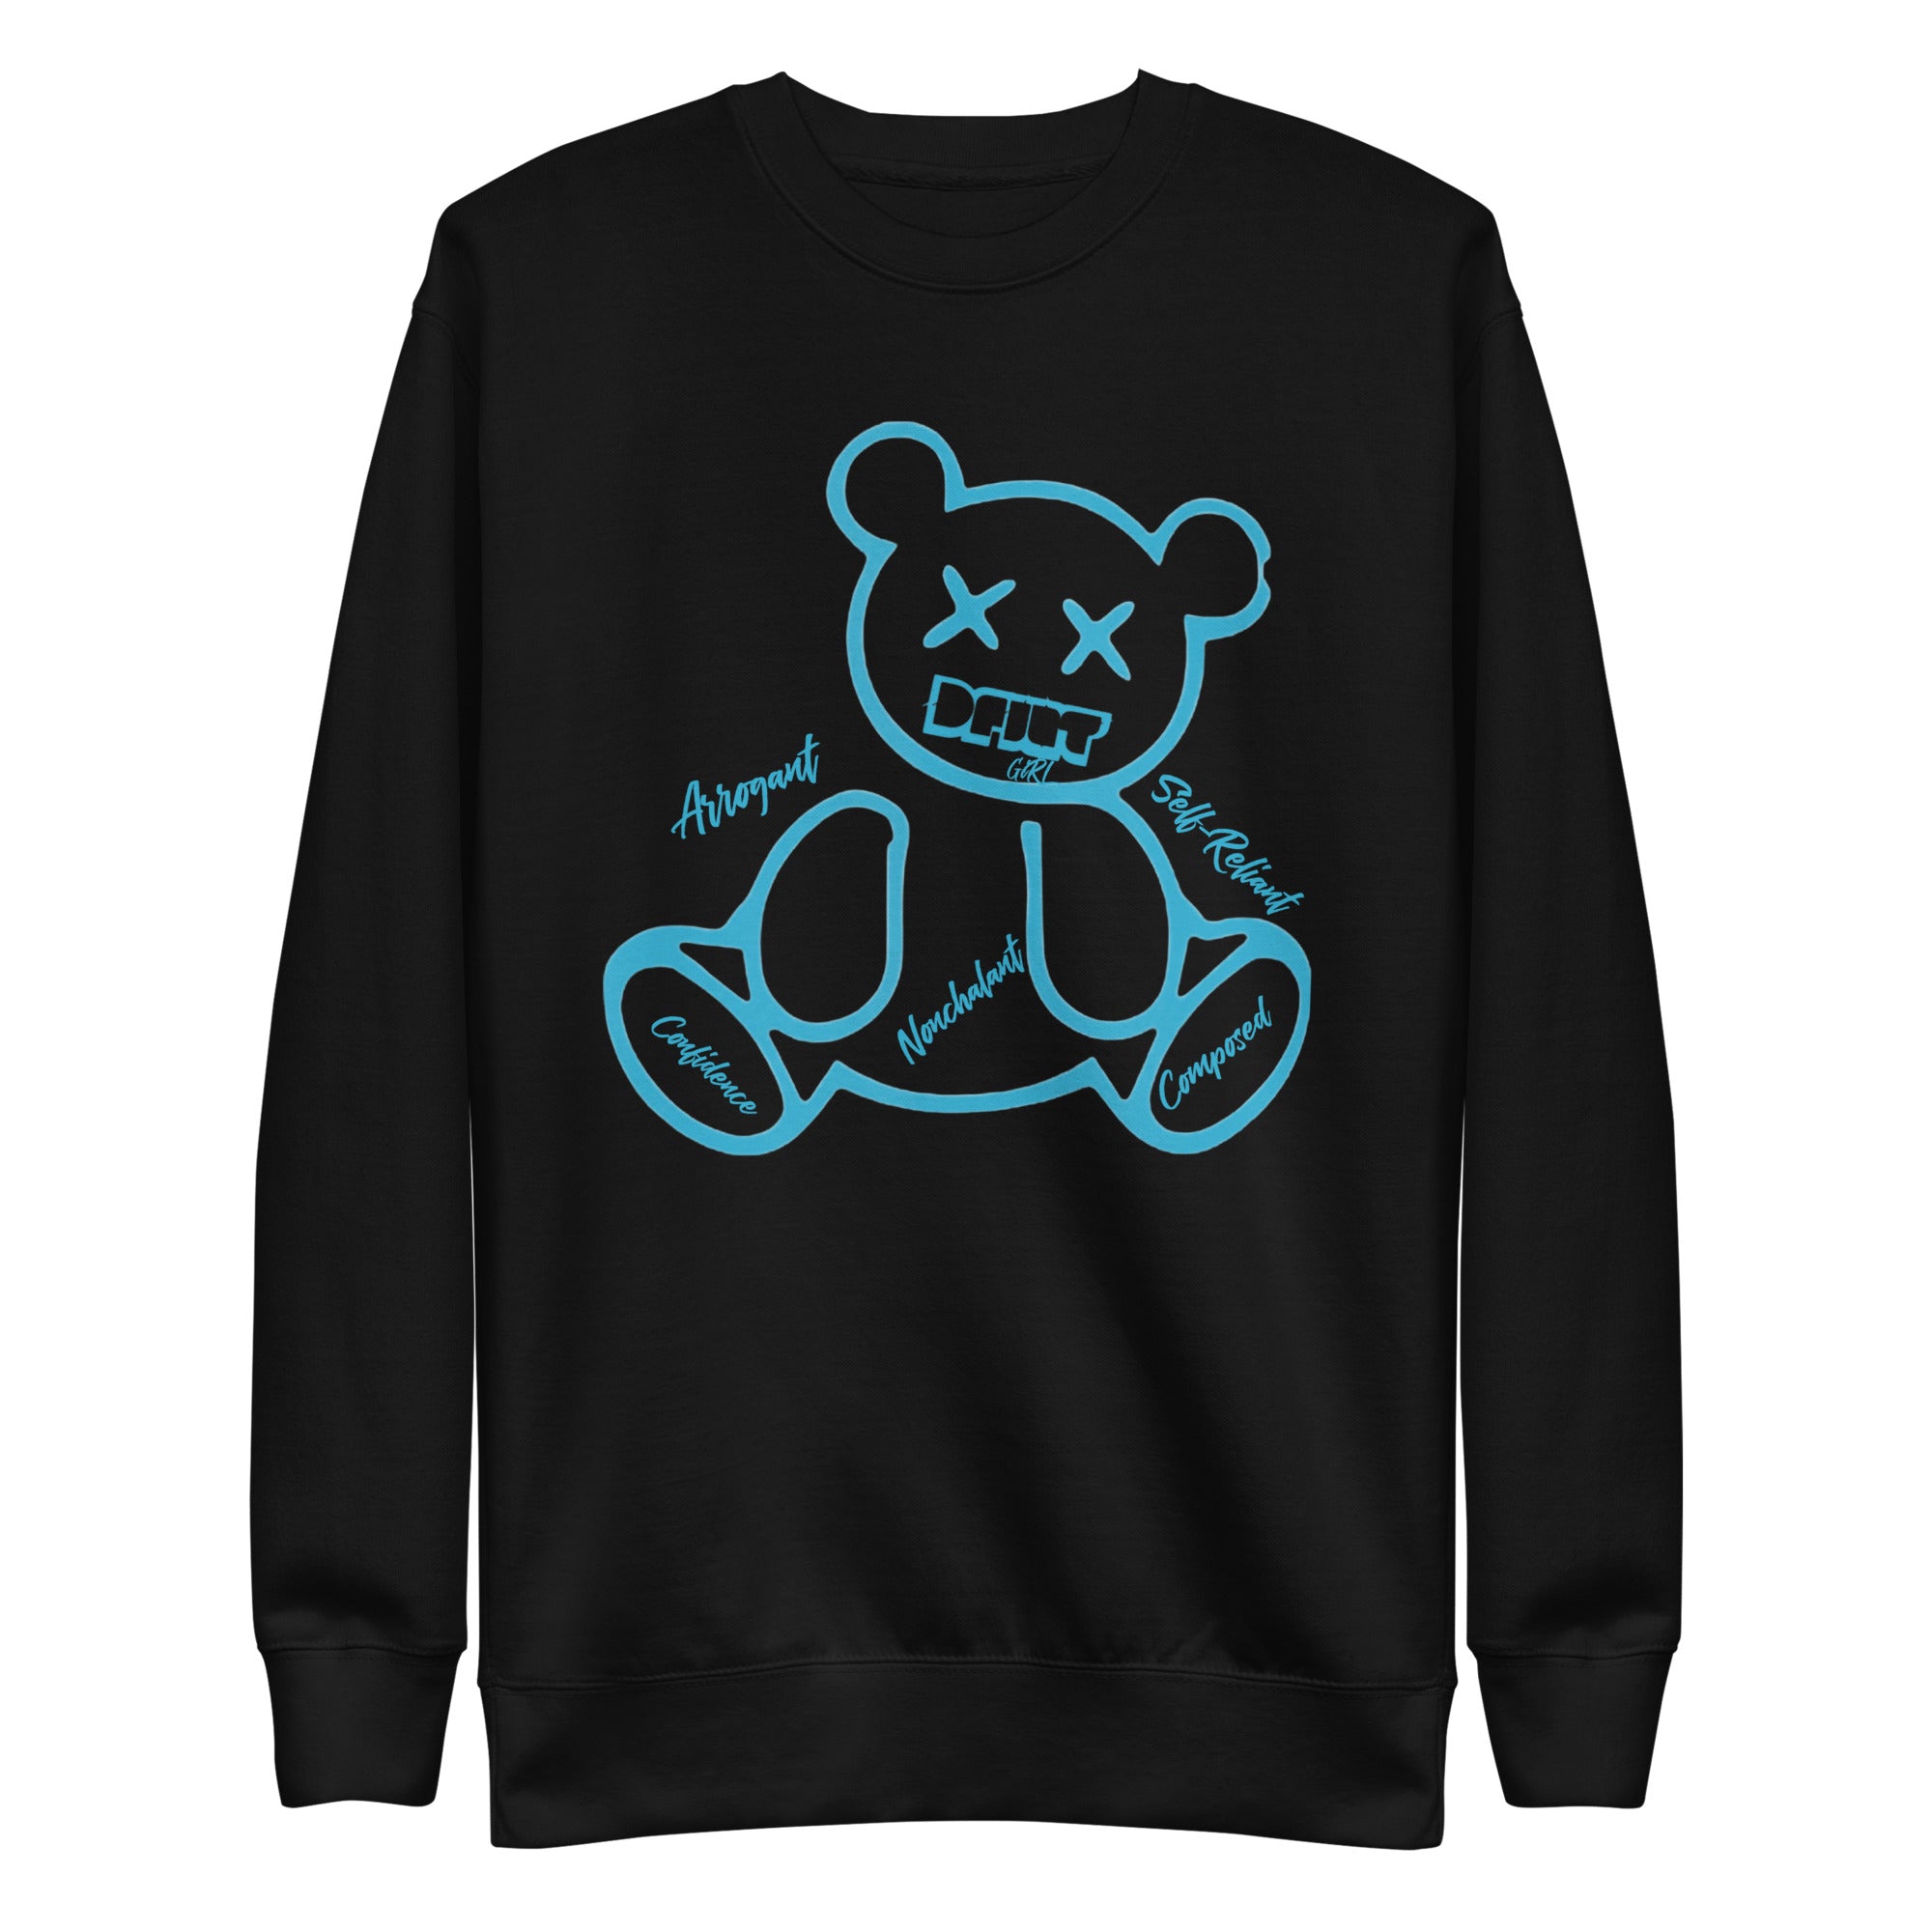 DFiNT GiRL Bear Premium Sweatshirt